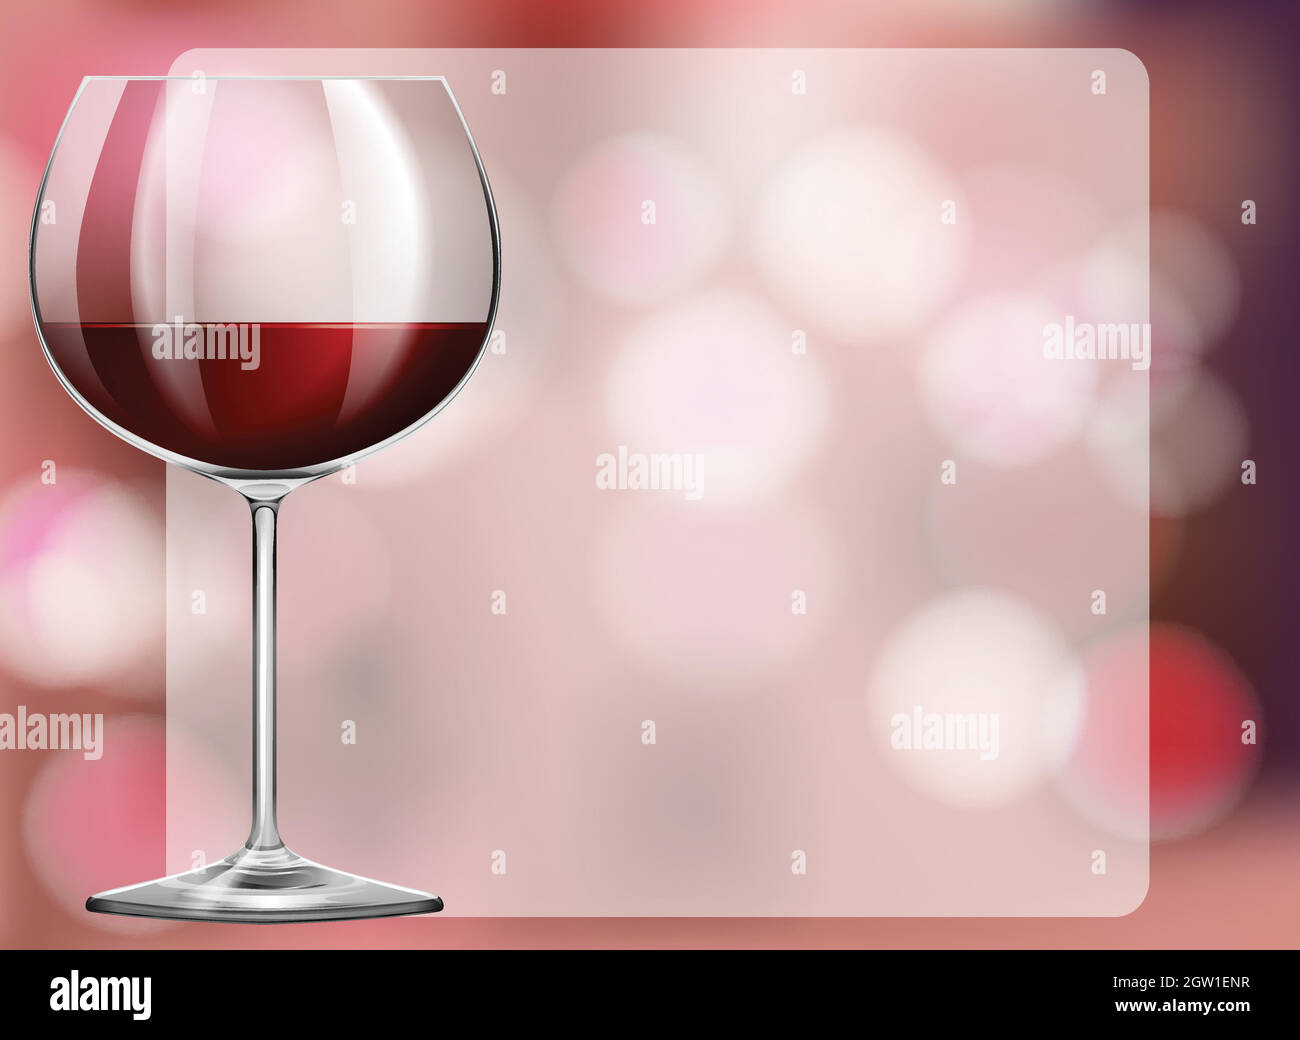 https://c8.alamy.com/comp/2GW1ENR/frame-design-with-red-wine-in-glass-2GW1ENR.jpg